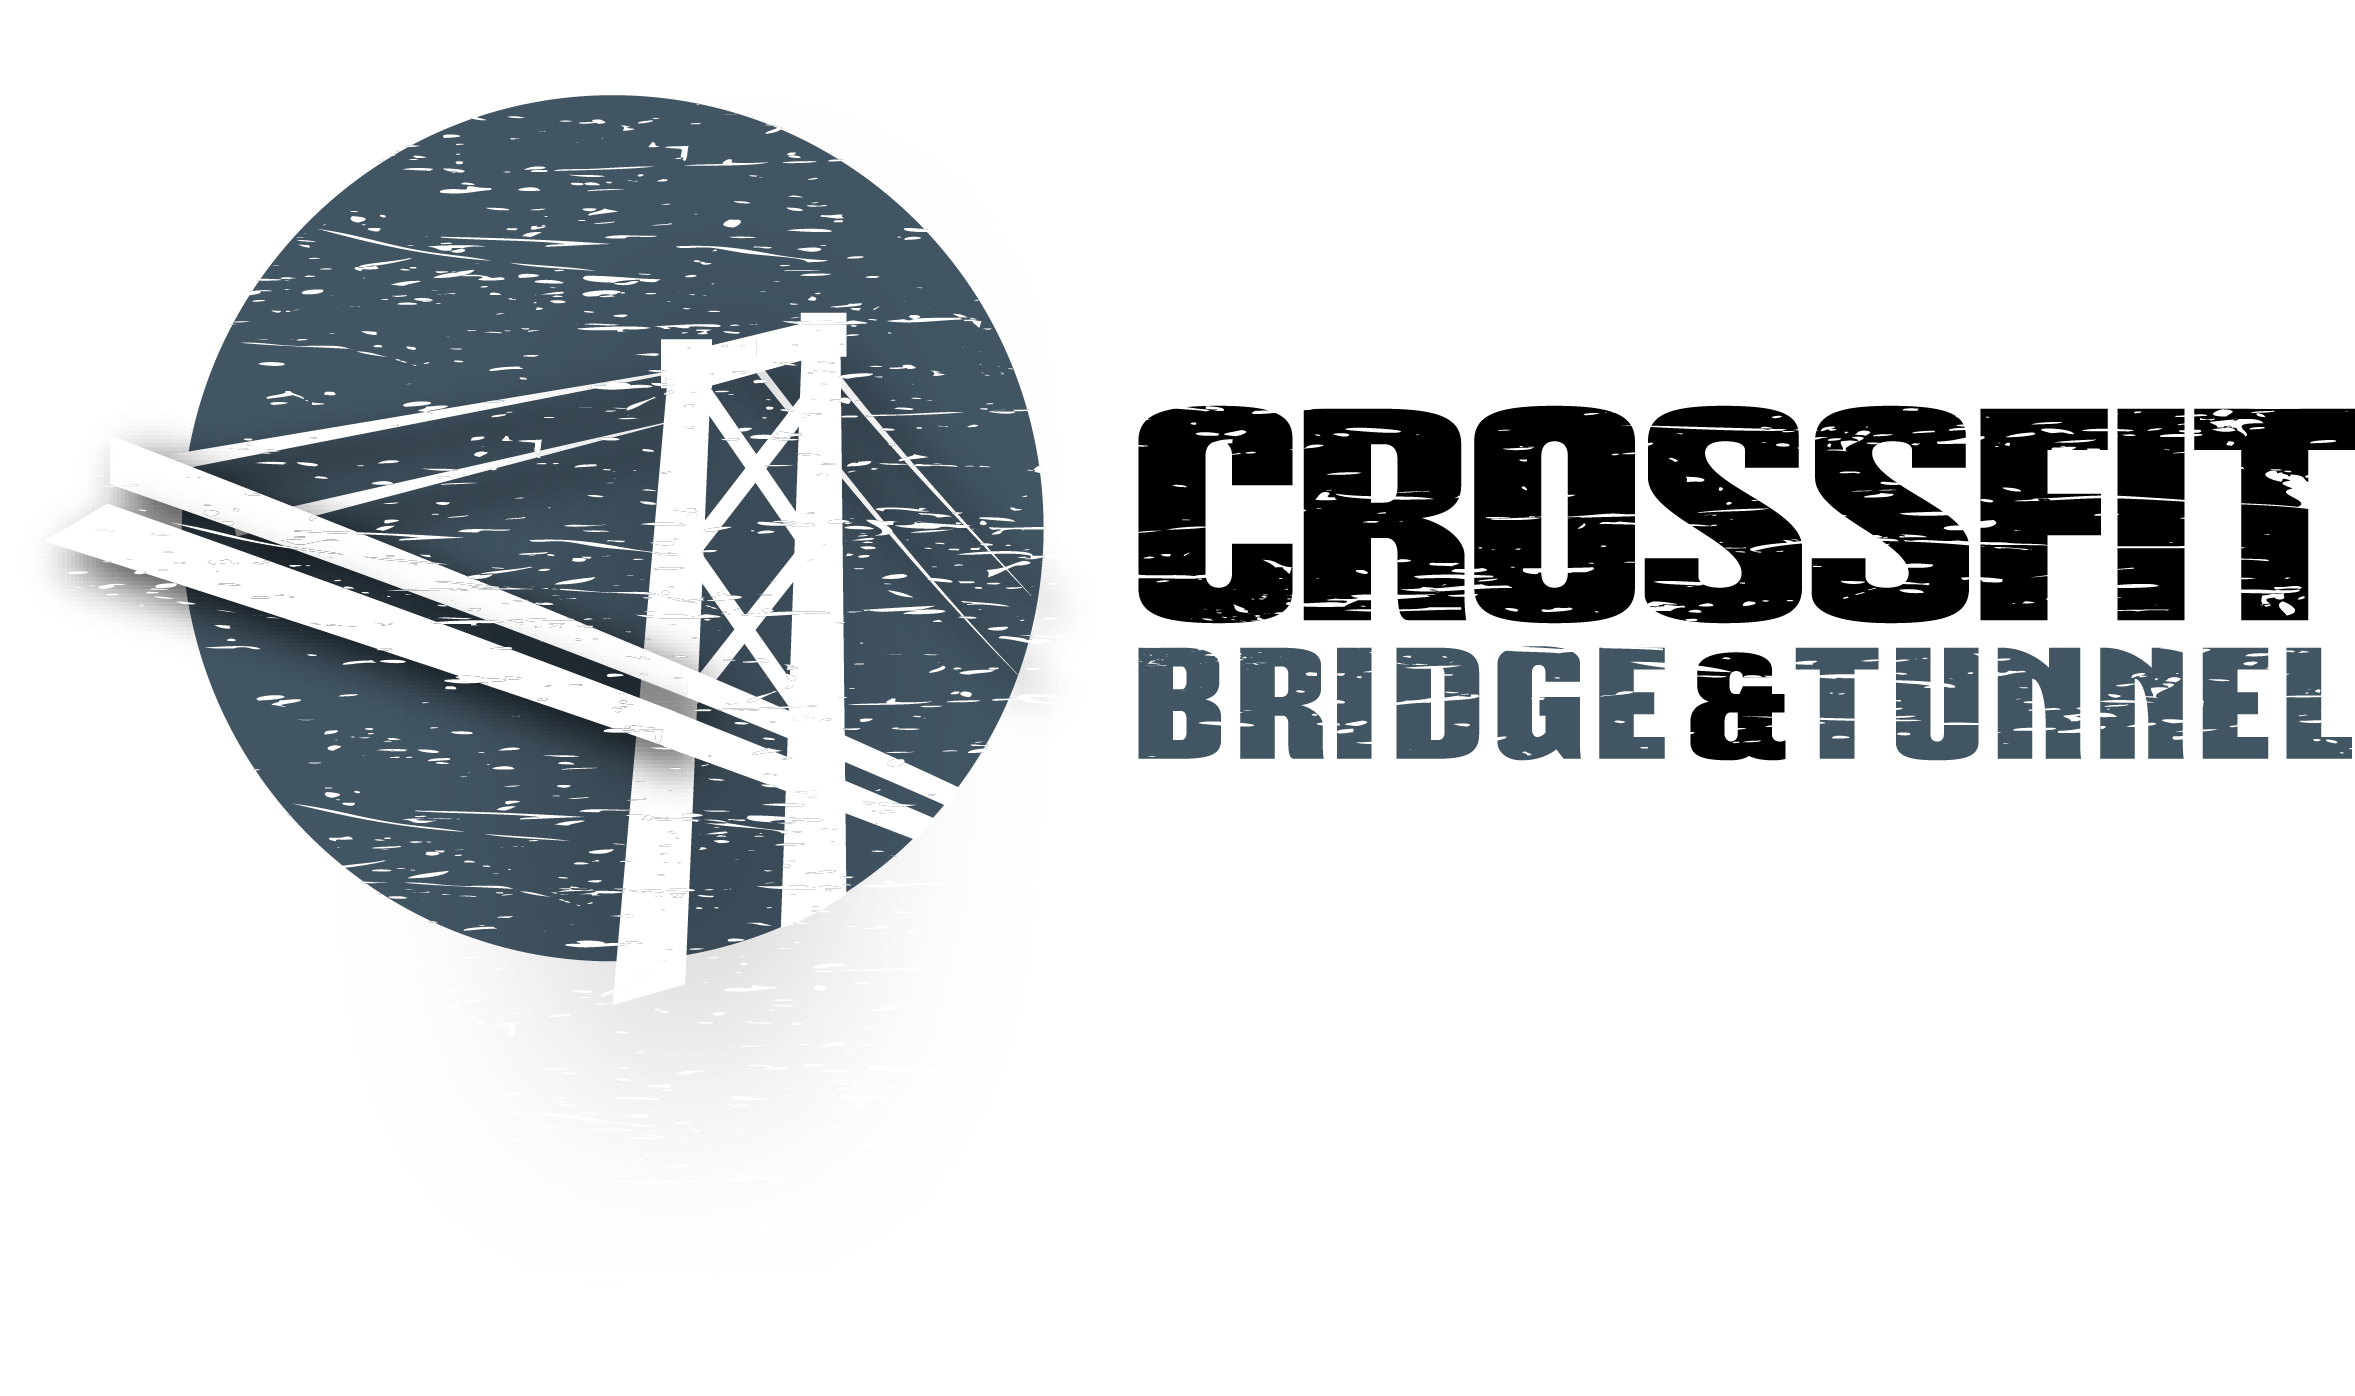 CrossFit Bridge & Tunnel logo